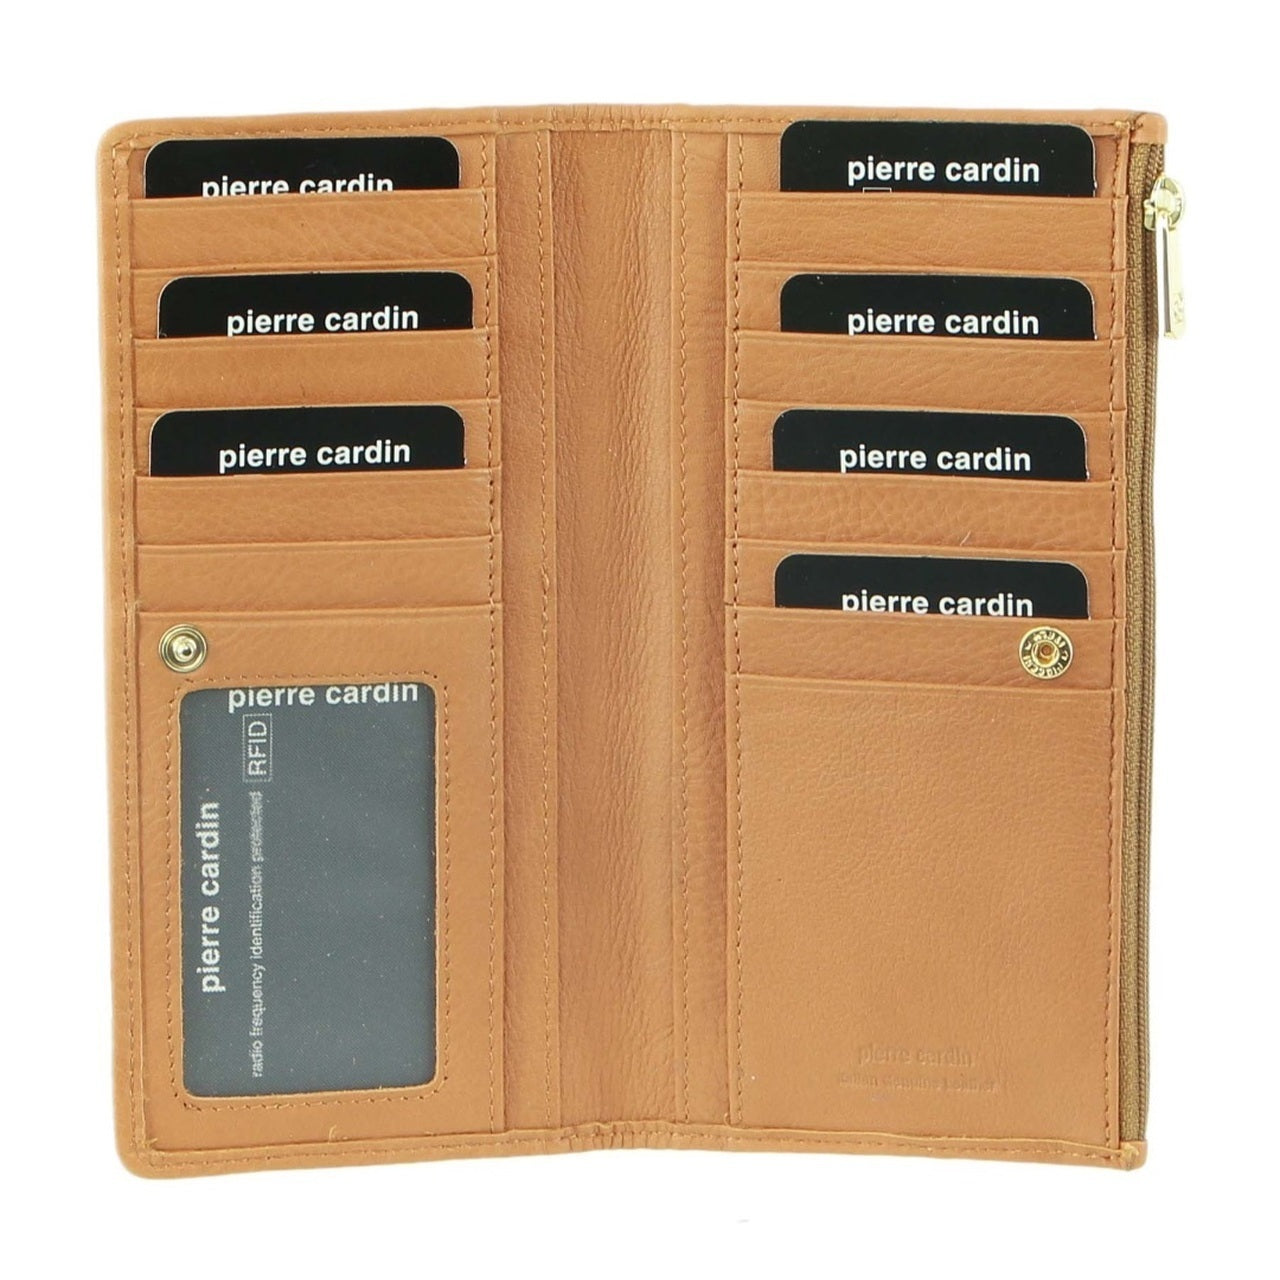 Pierre Cardin Womens Soft Italian Leather RFID Purse Wallet - Tobacco - SILBERSHELL